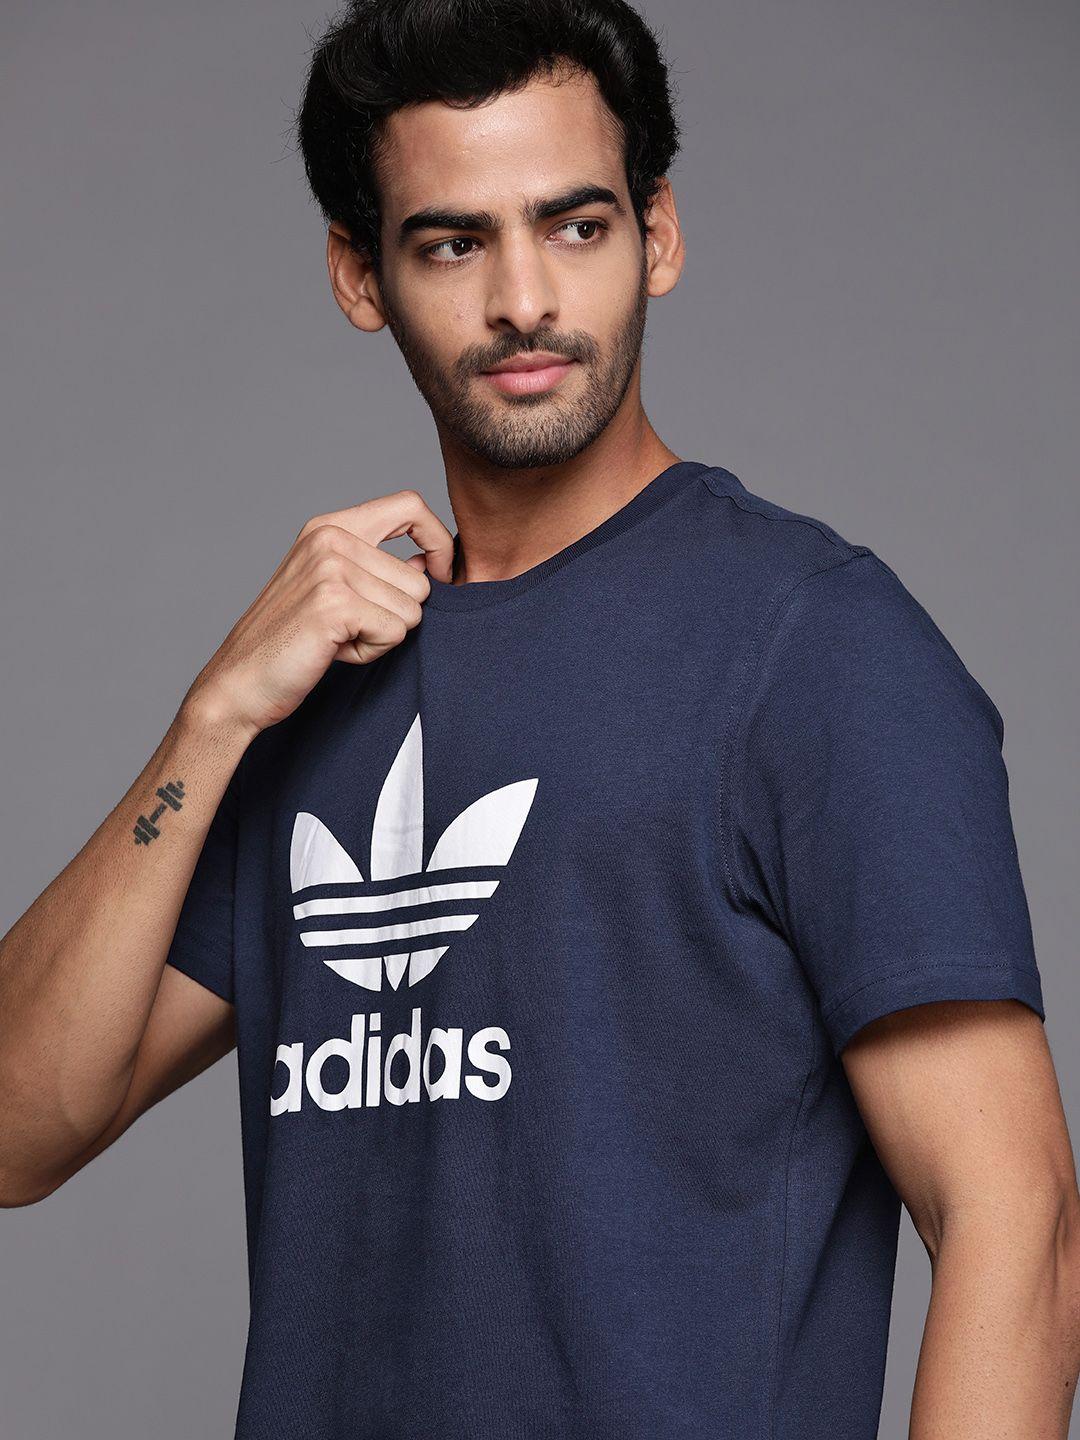 adidas originals men navy blue & white pure cotton trefoil brand logo print t-shirt